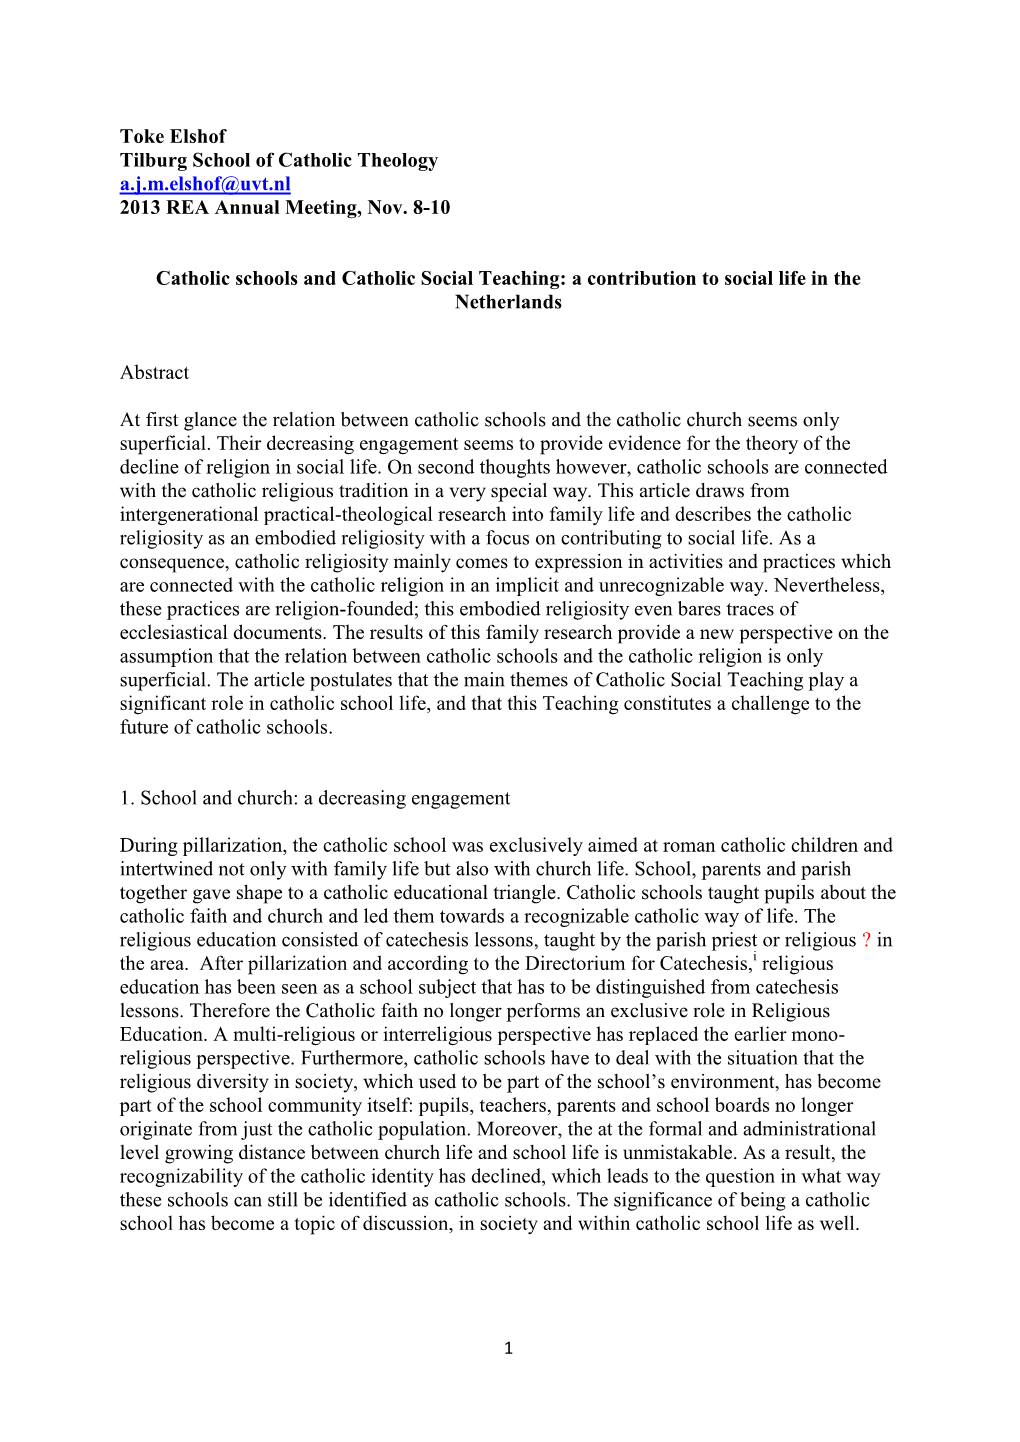 Catholic Schools and the Catholic Social Teaching